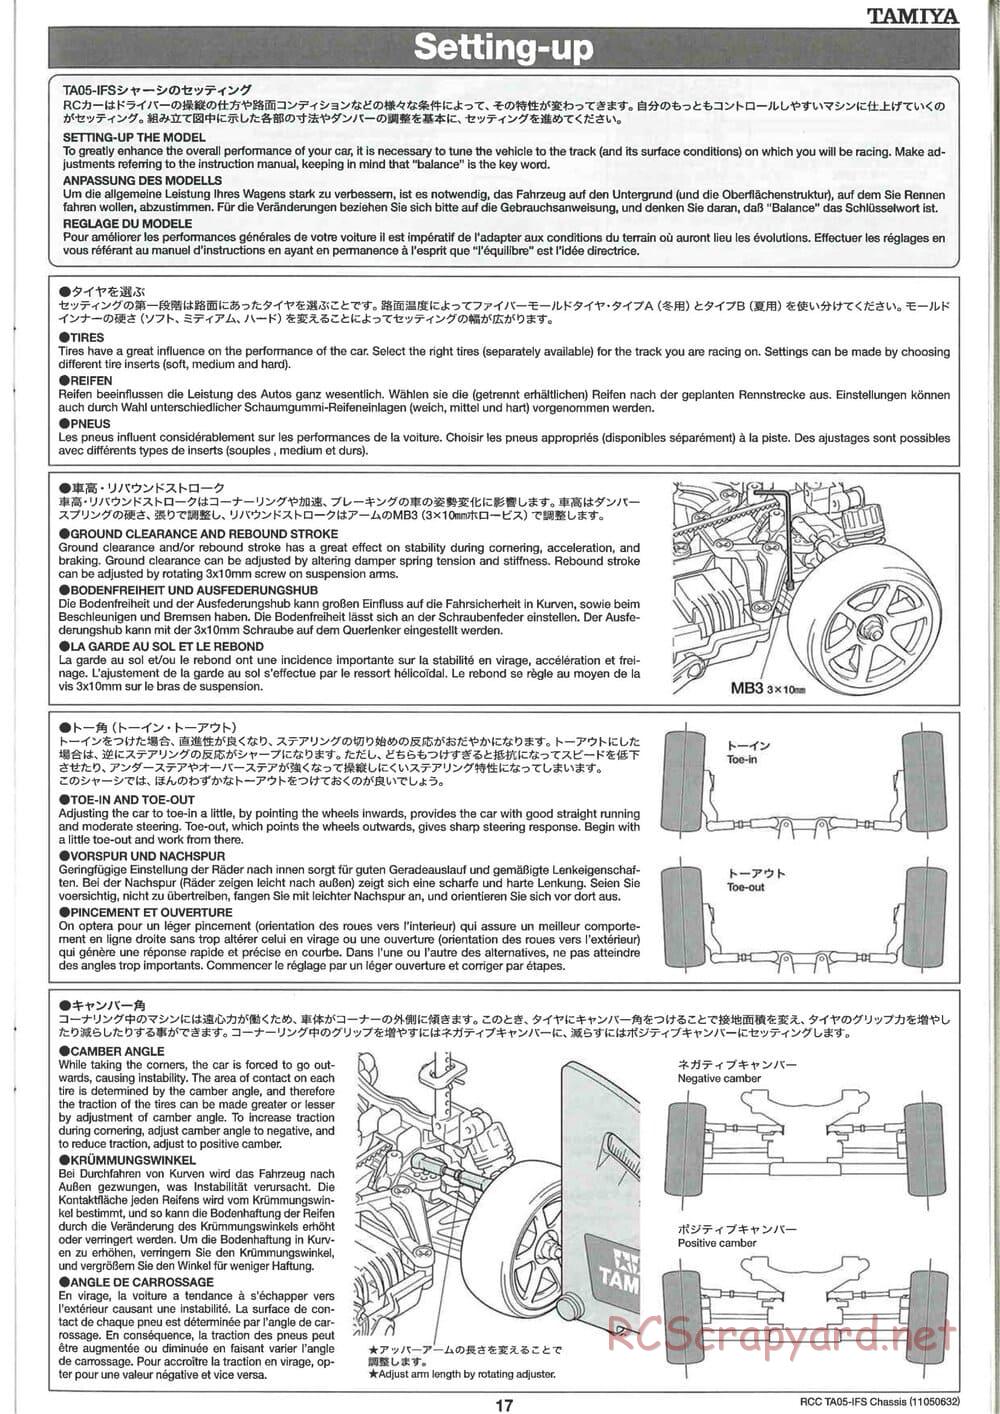 Tamiya - TA05-IFS Chassis - Manual - Page 17